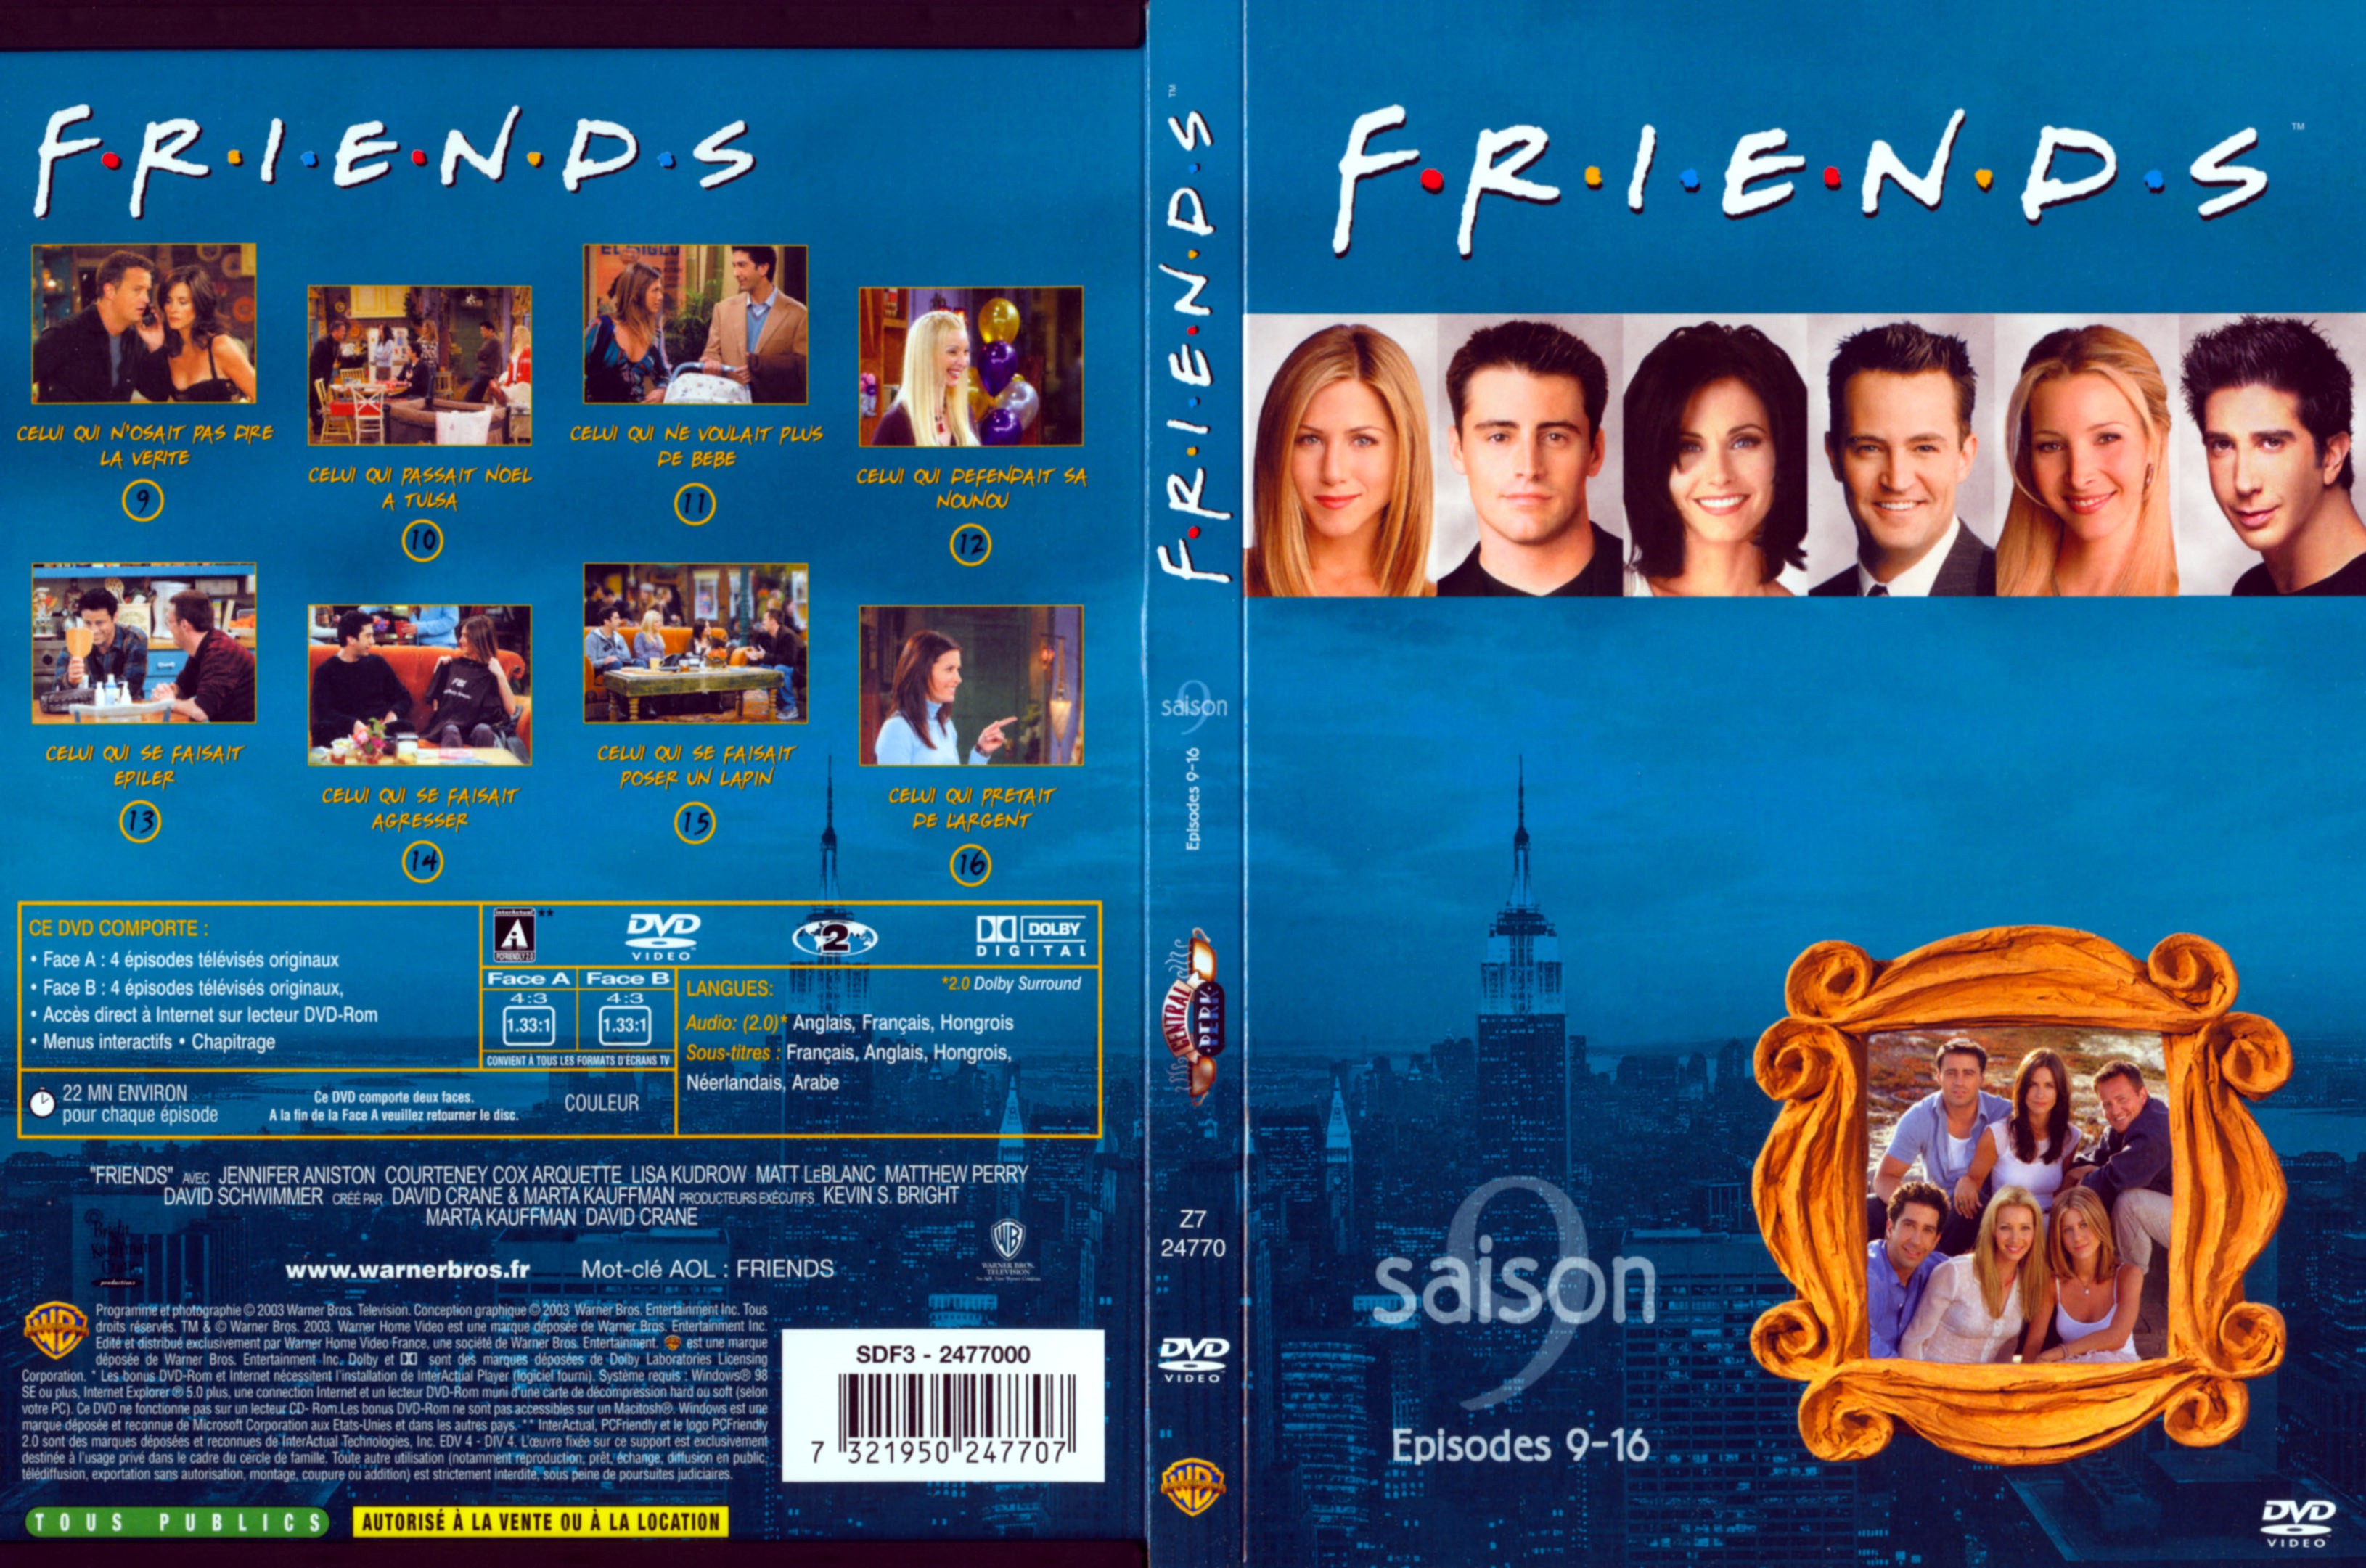 Jaquette DVD Friends saison 9 dvd 2